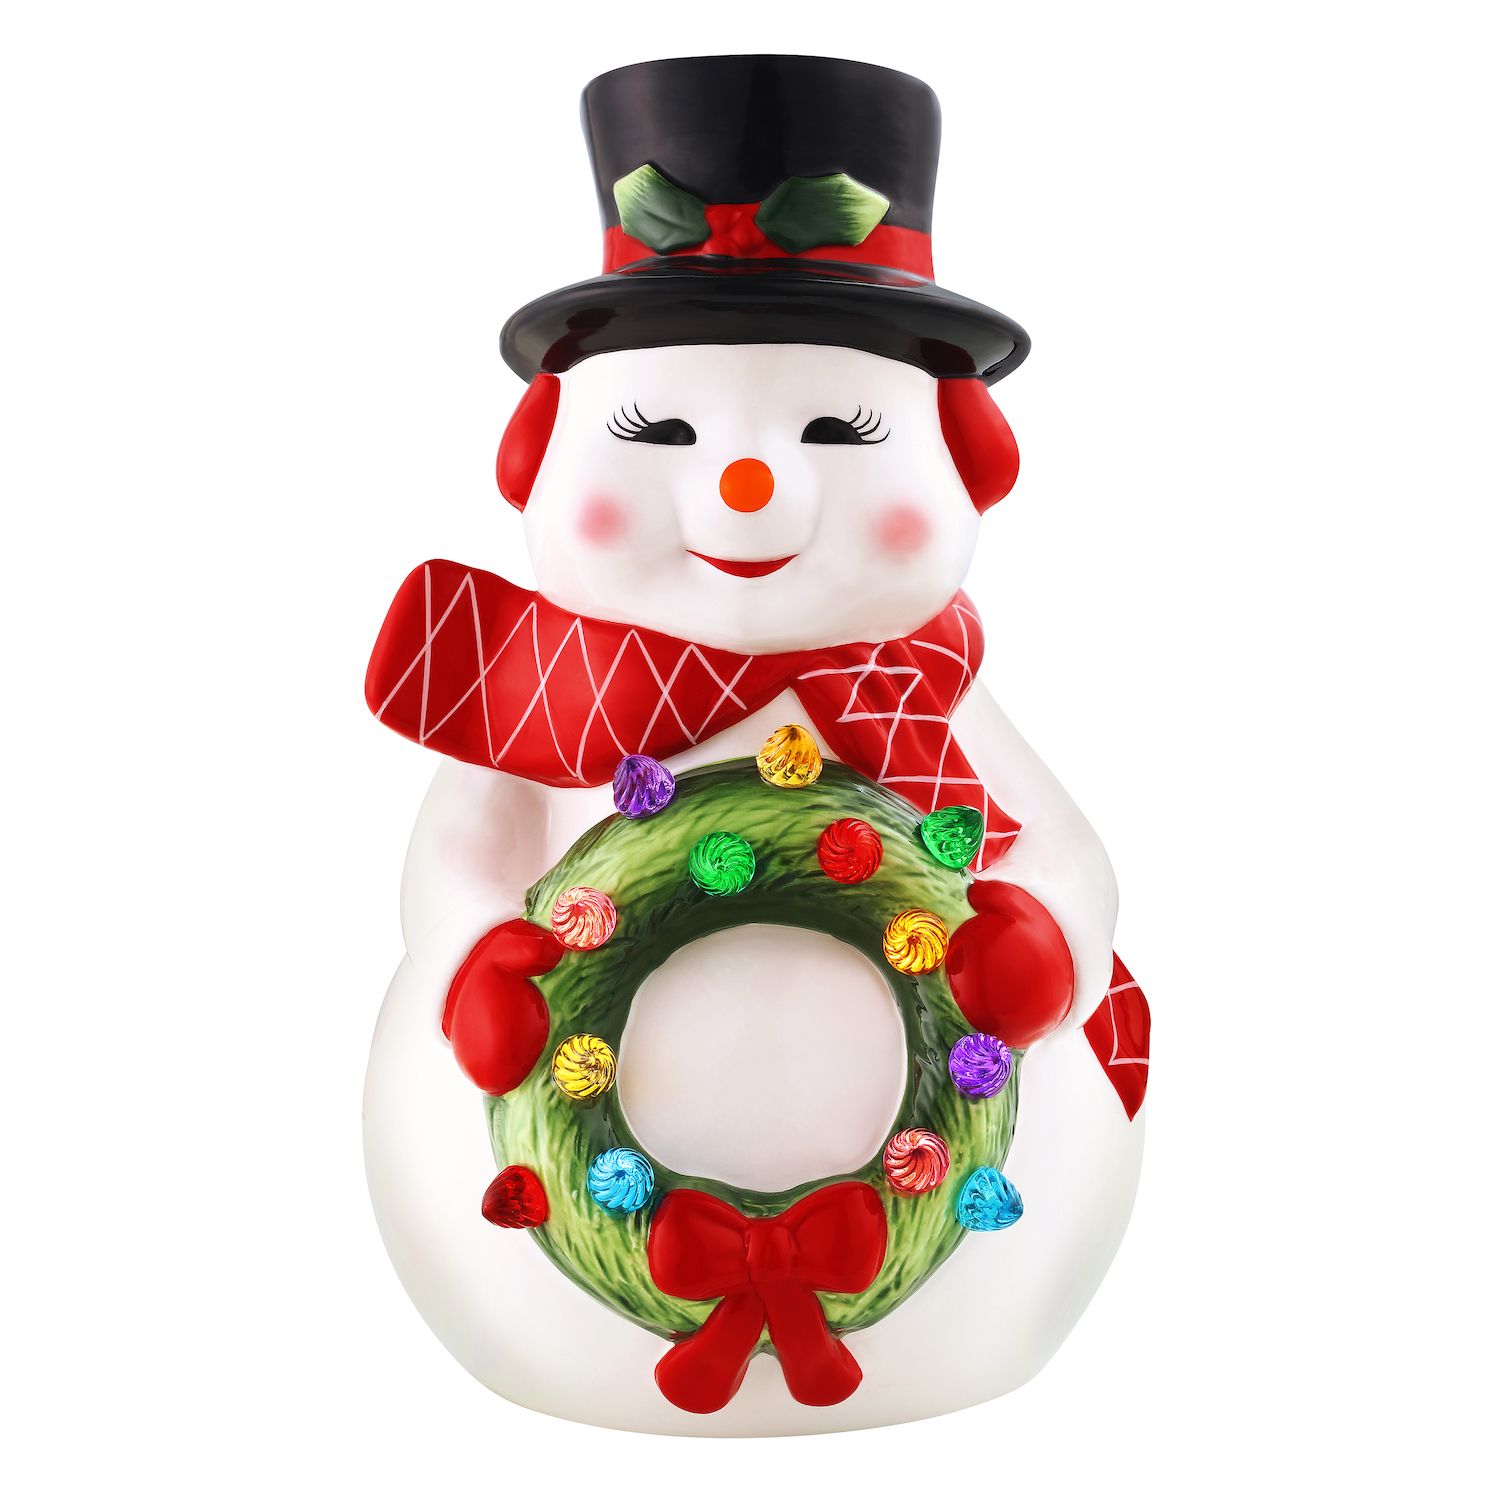 G Debrekht Joy Love Peace Snowman Outdoor Scene by Susan Winget | Designocracy X-Large